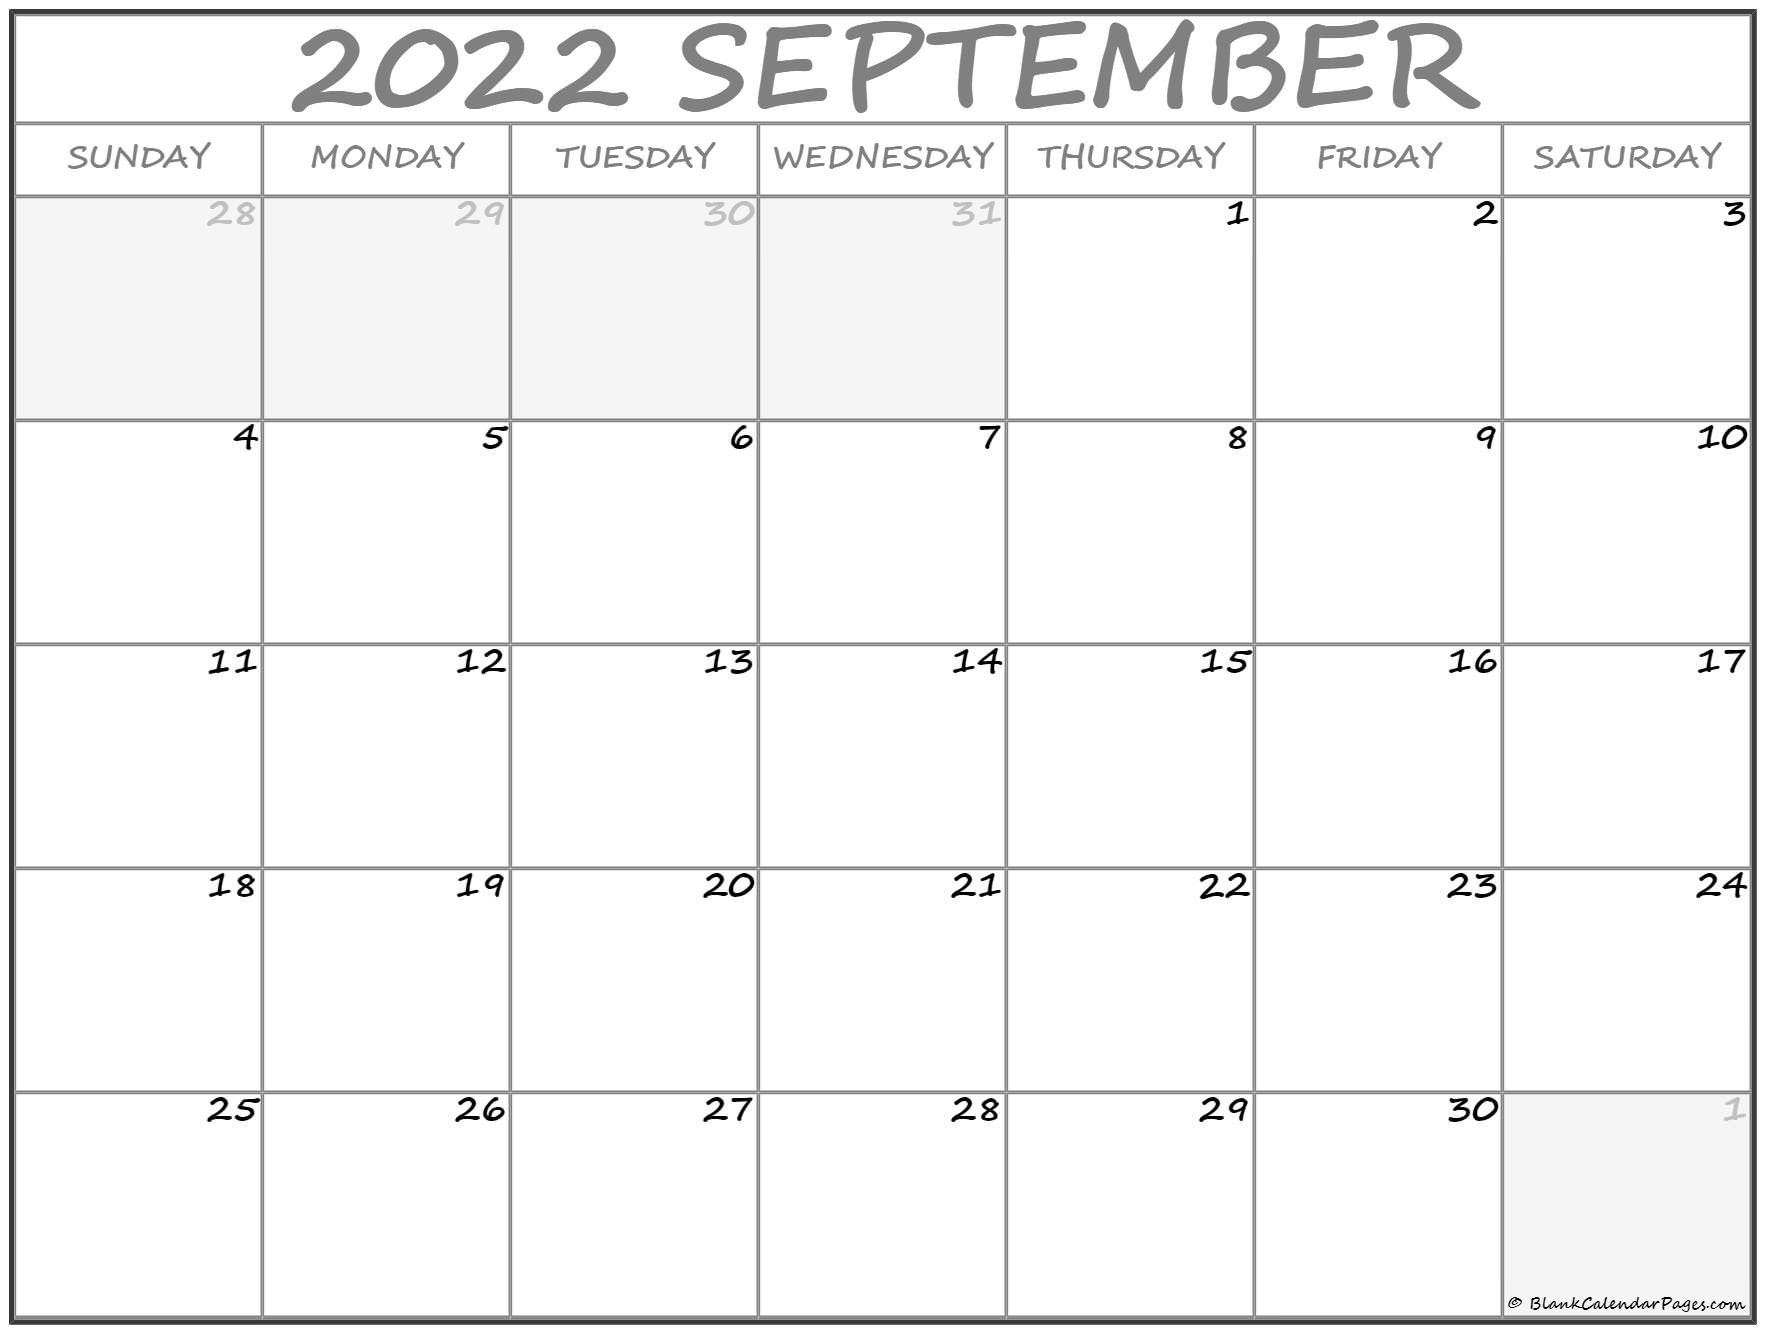 September 2022 Calendar | Free Printable Calendar Templates  Astronomy Picture Of The Day Calendar September 2022